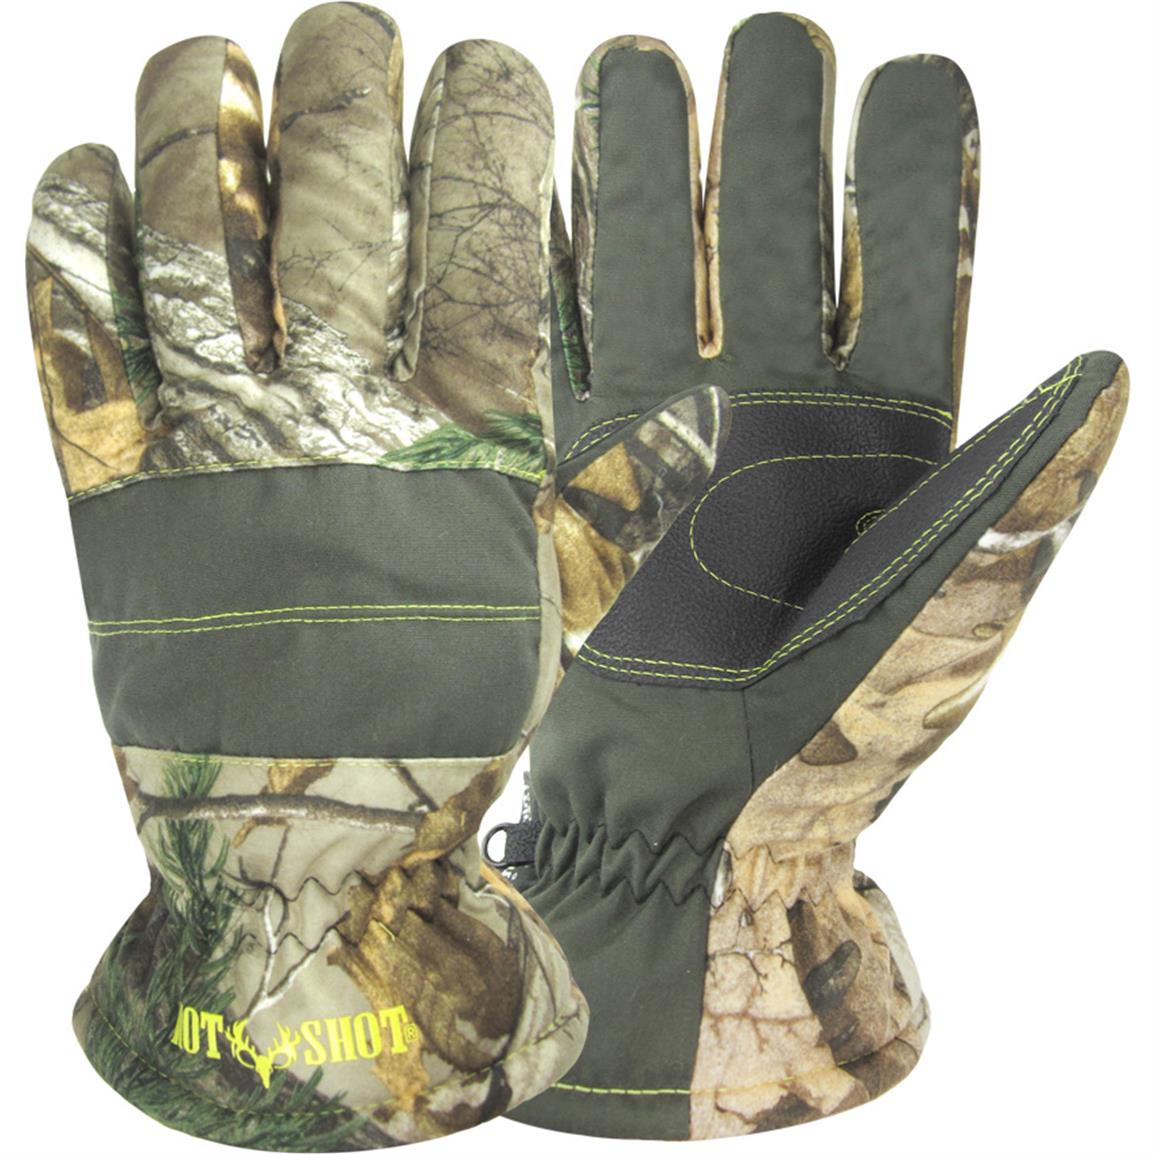 Hot Shot Men's Camo Hunting Gloves, Waterproof, 2 Pack, Realtree Xtra